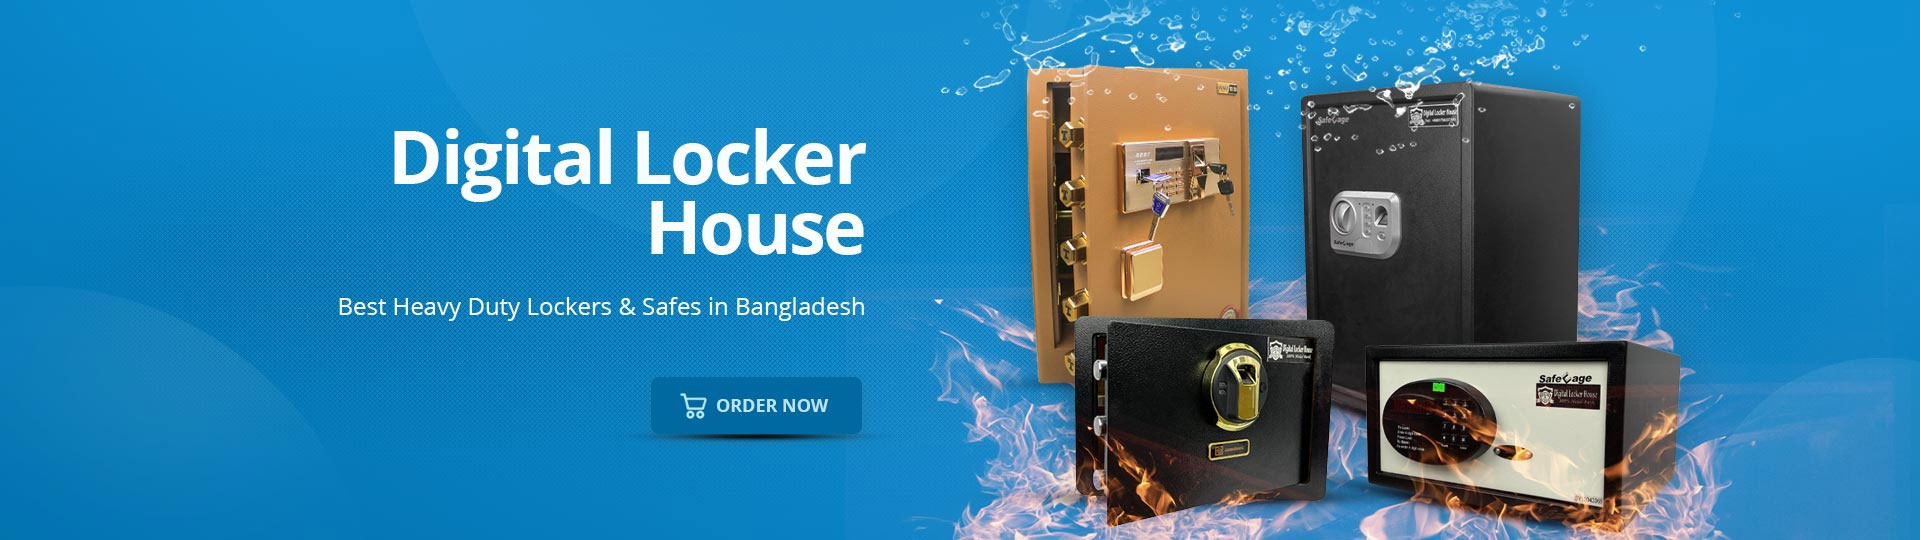 Digital Locker price in Bangladesh